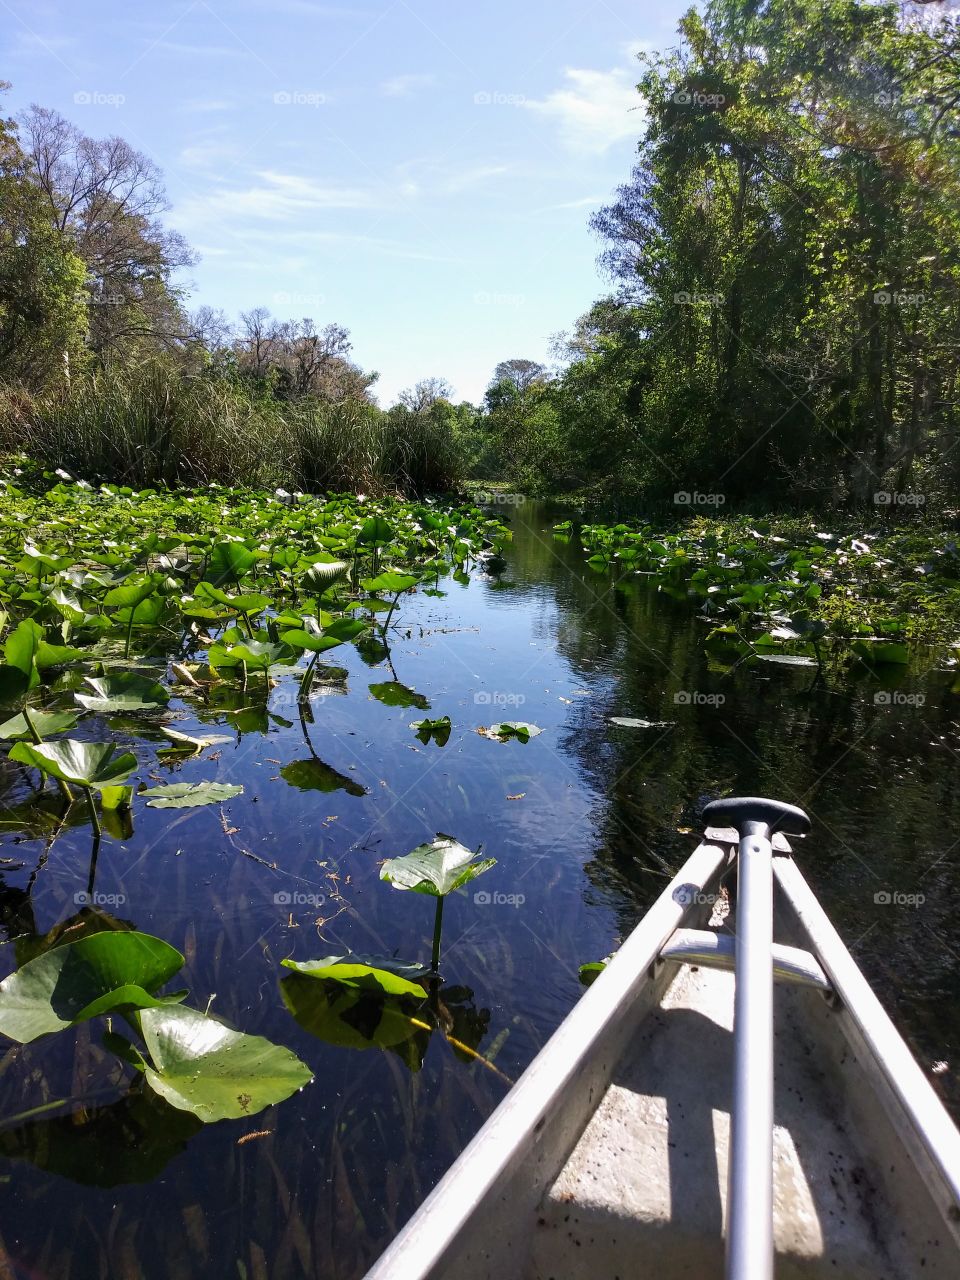 Canoeing 8.5 miles in Wekiva Florida.